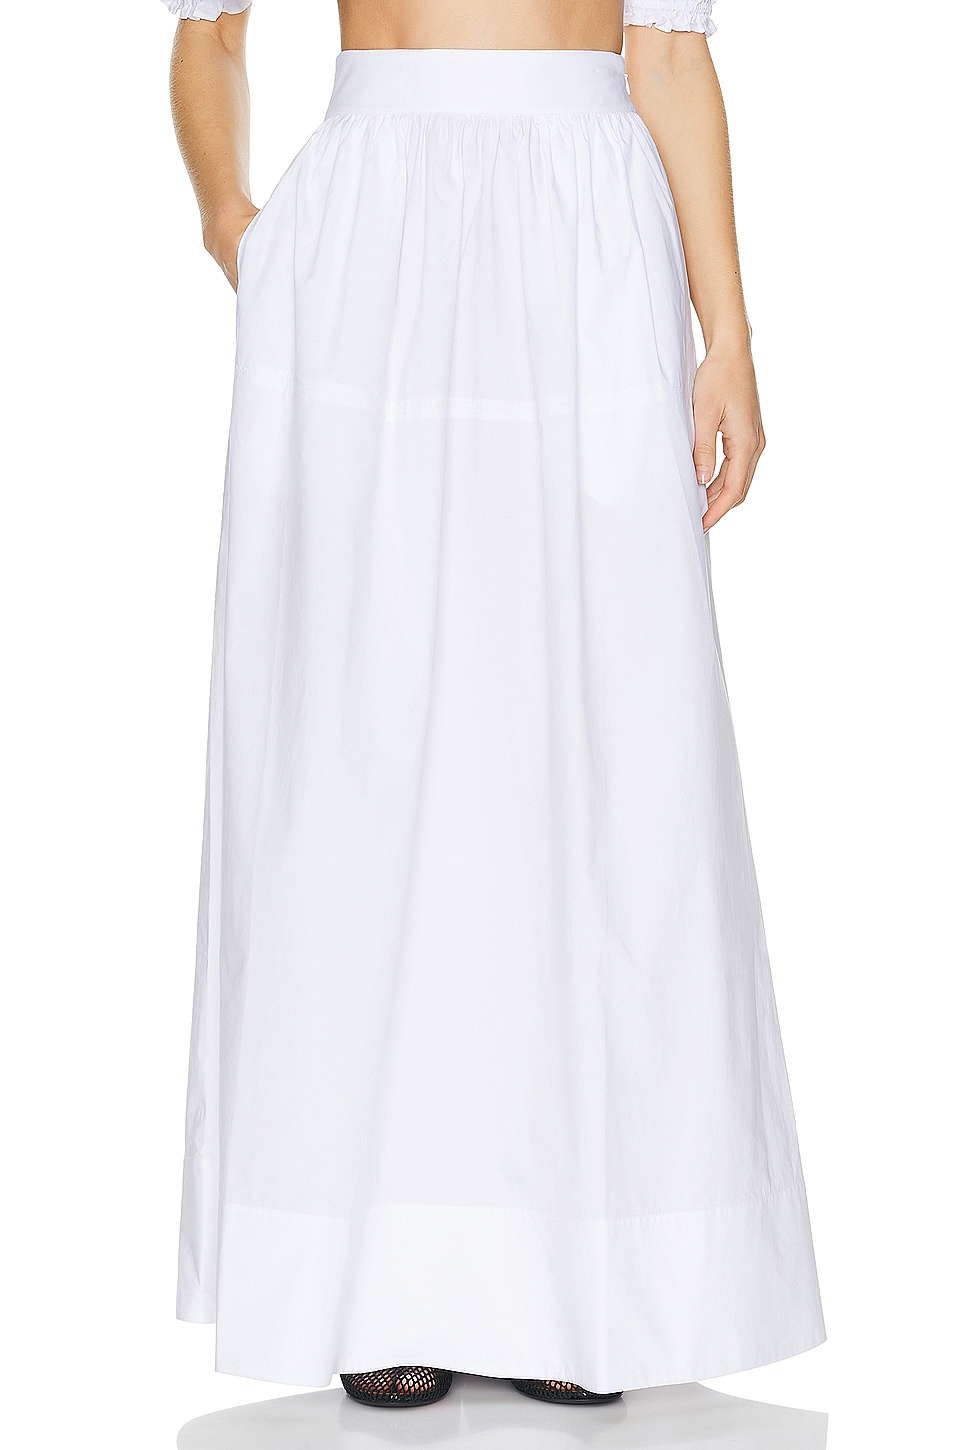 Poplin Maxi Skirt in White